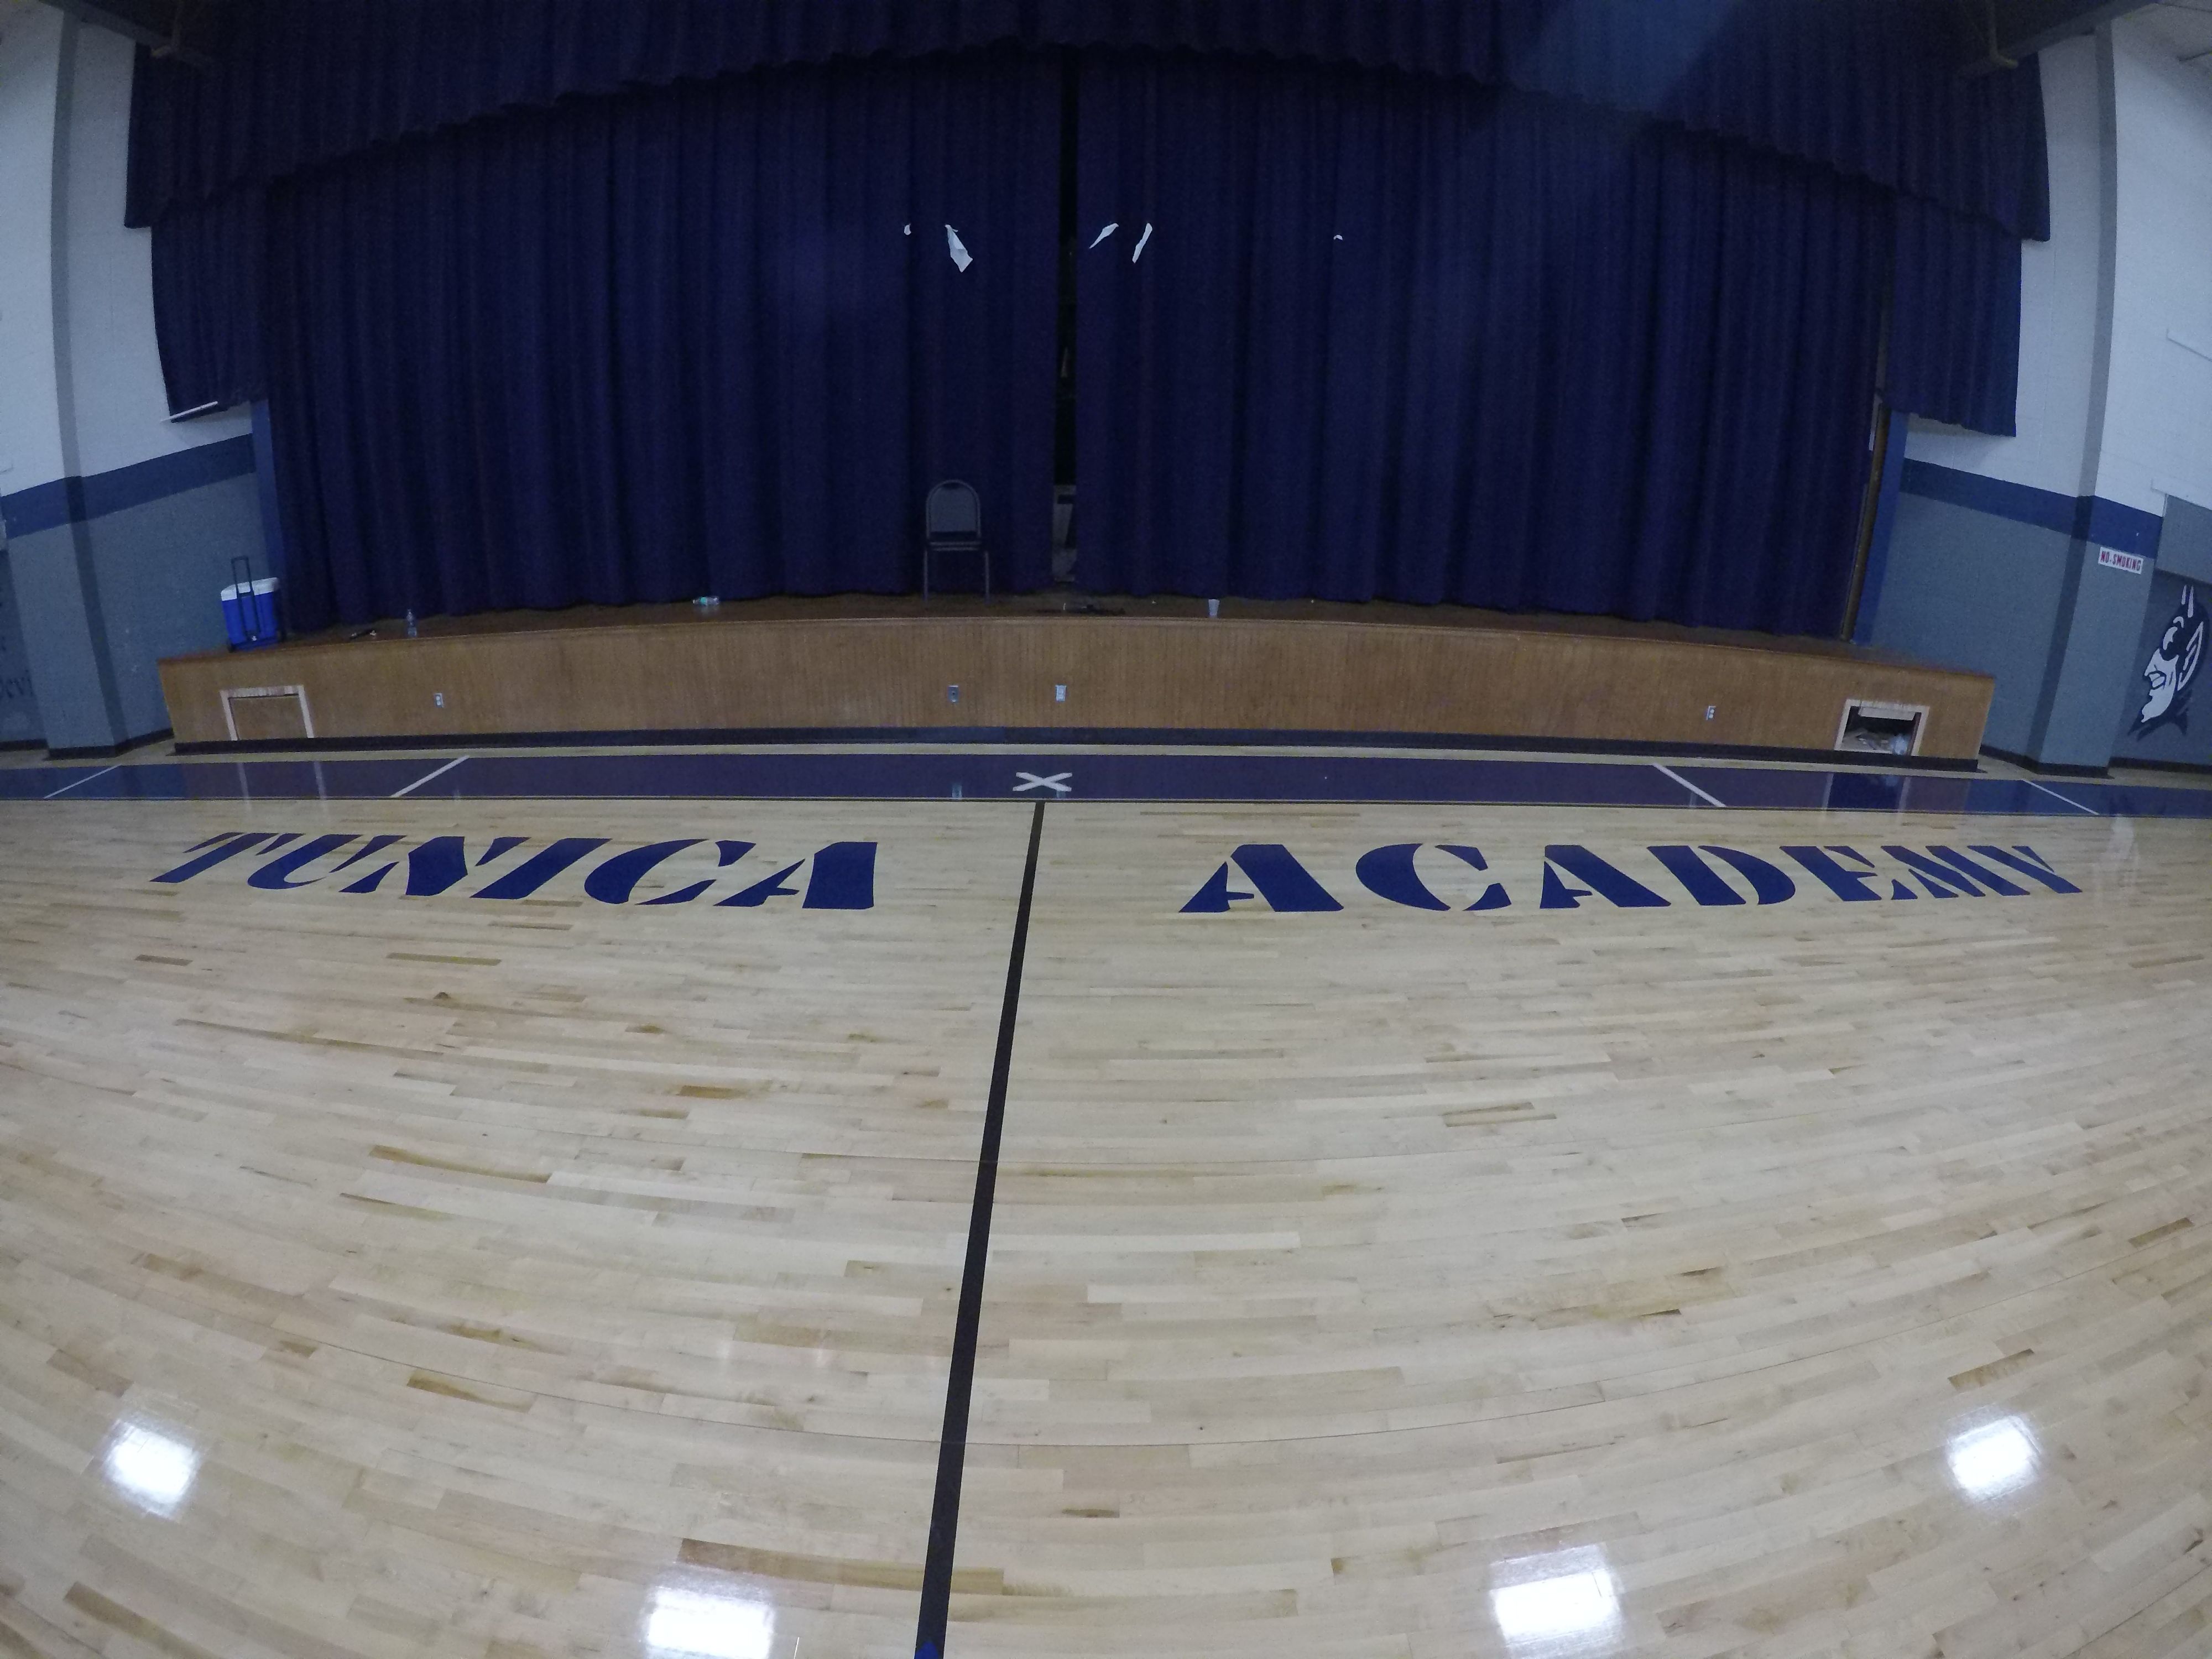 Tunica Academy